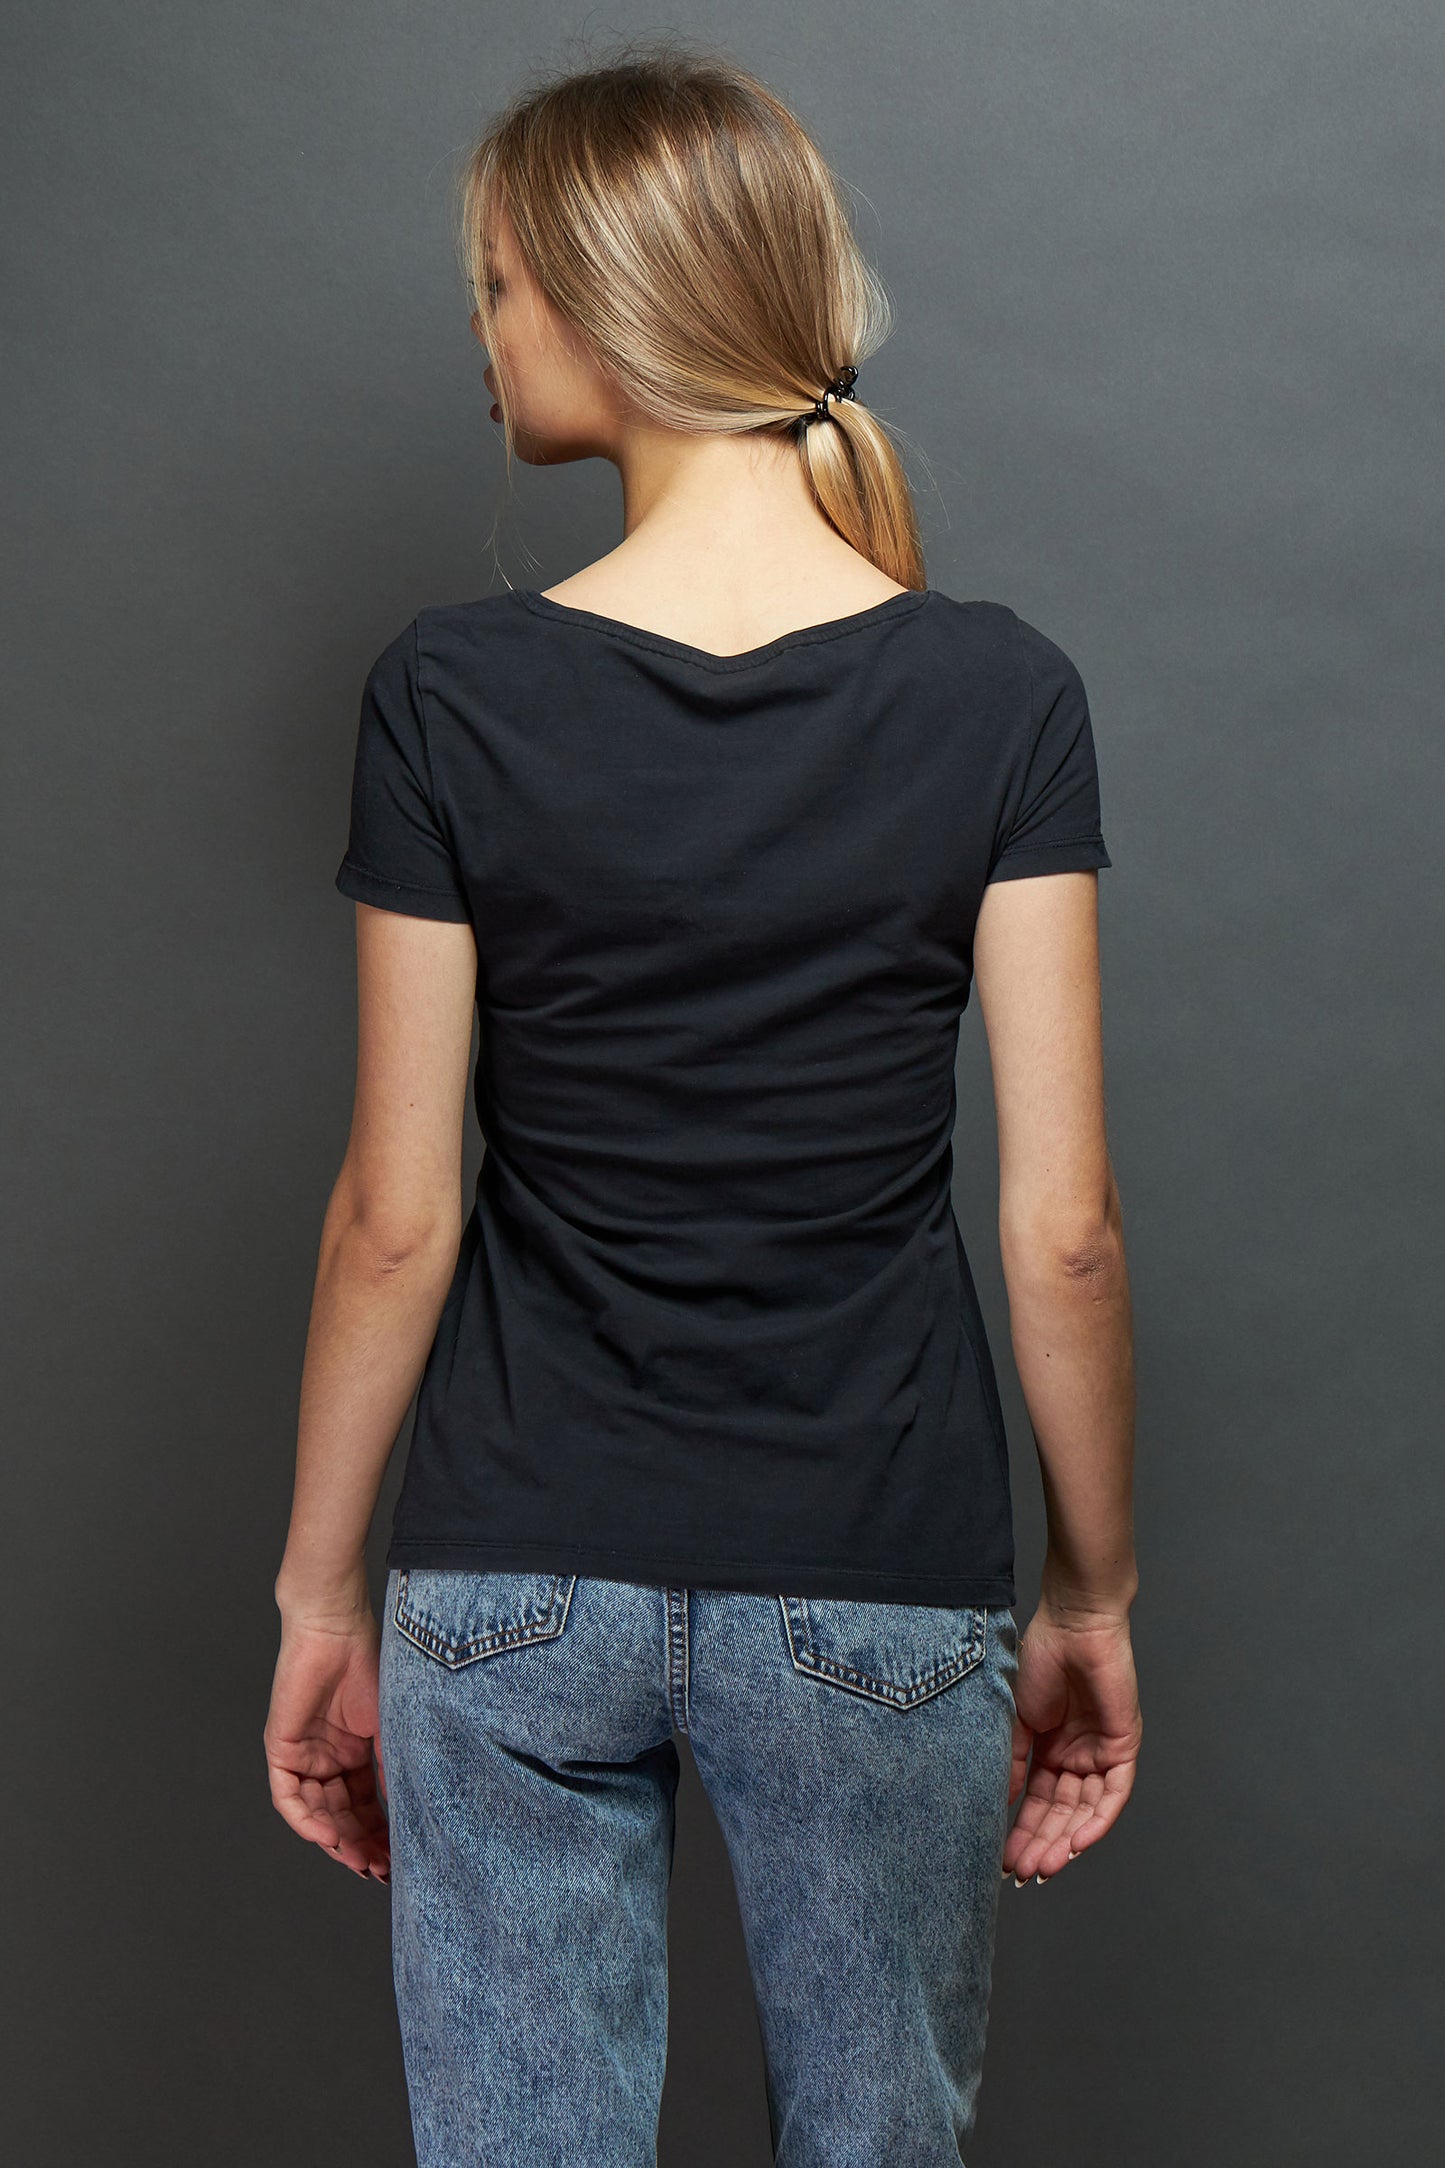 Embroidered Trippy Artwork Half Sleeve Black T-shirt For Women